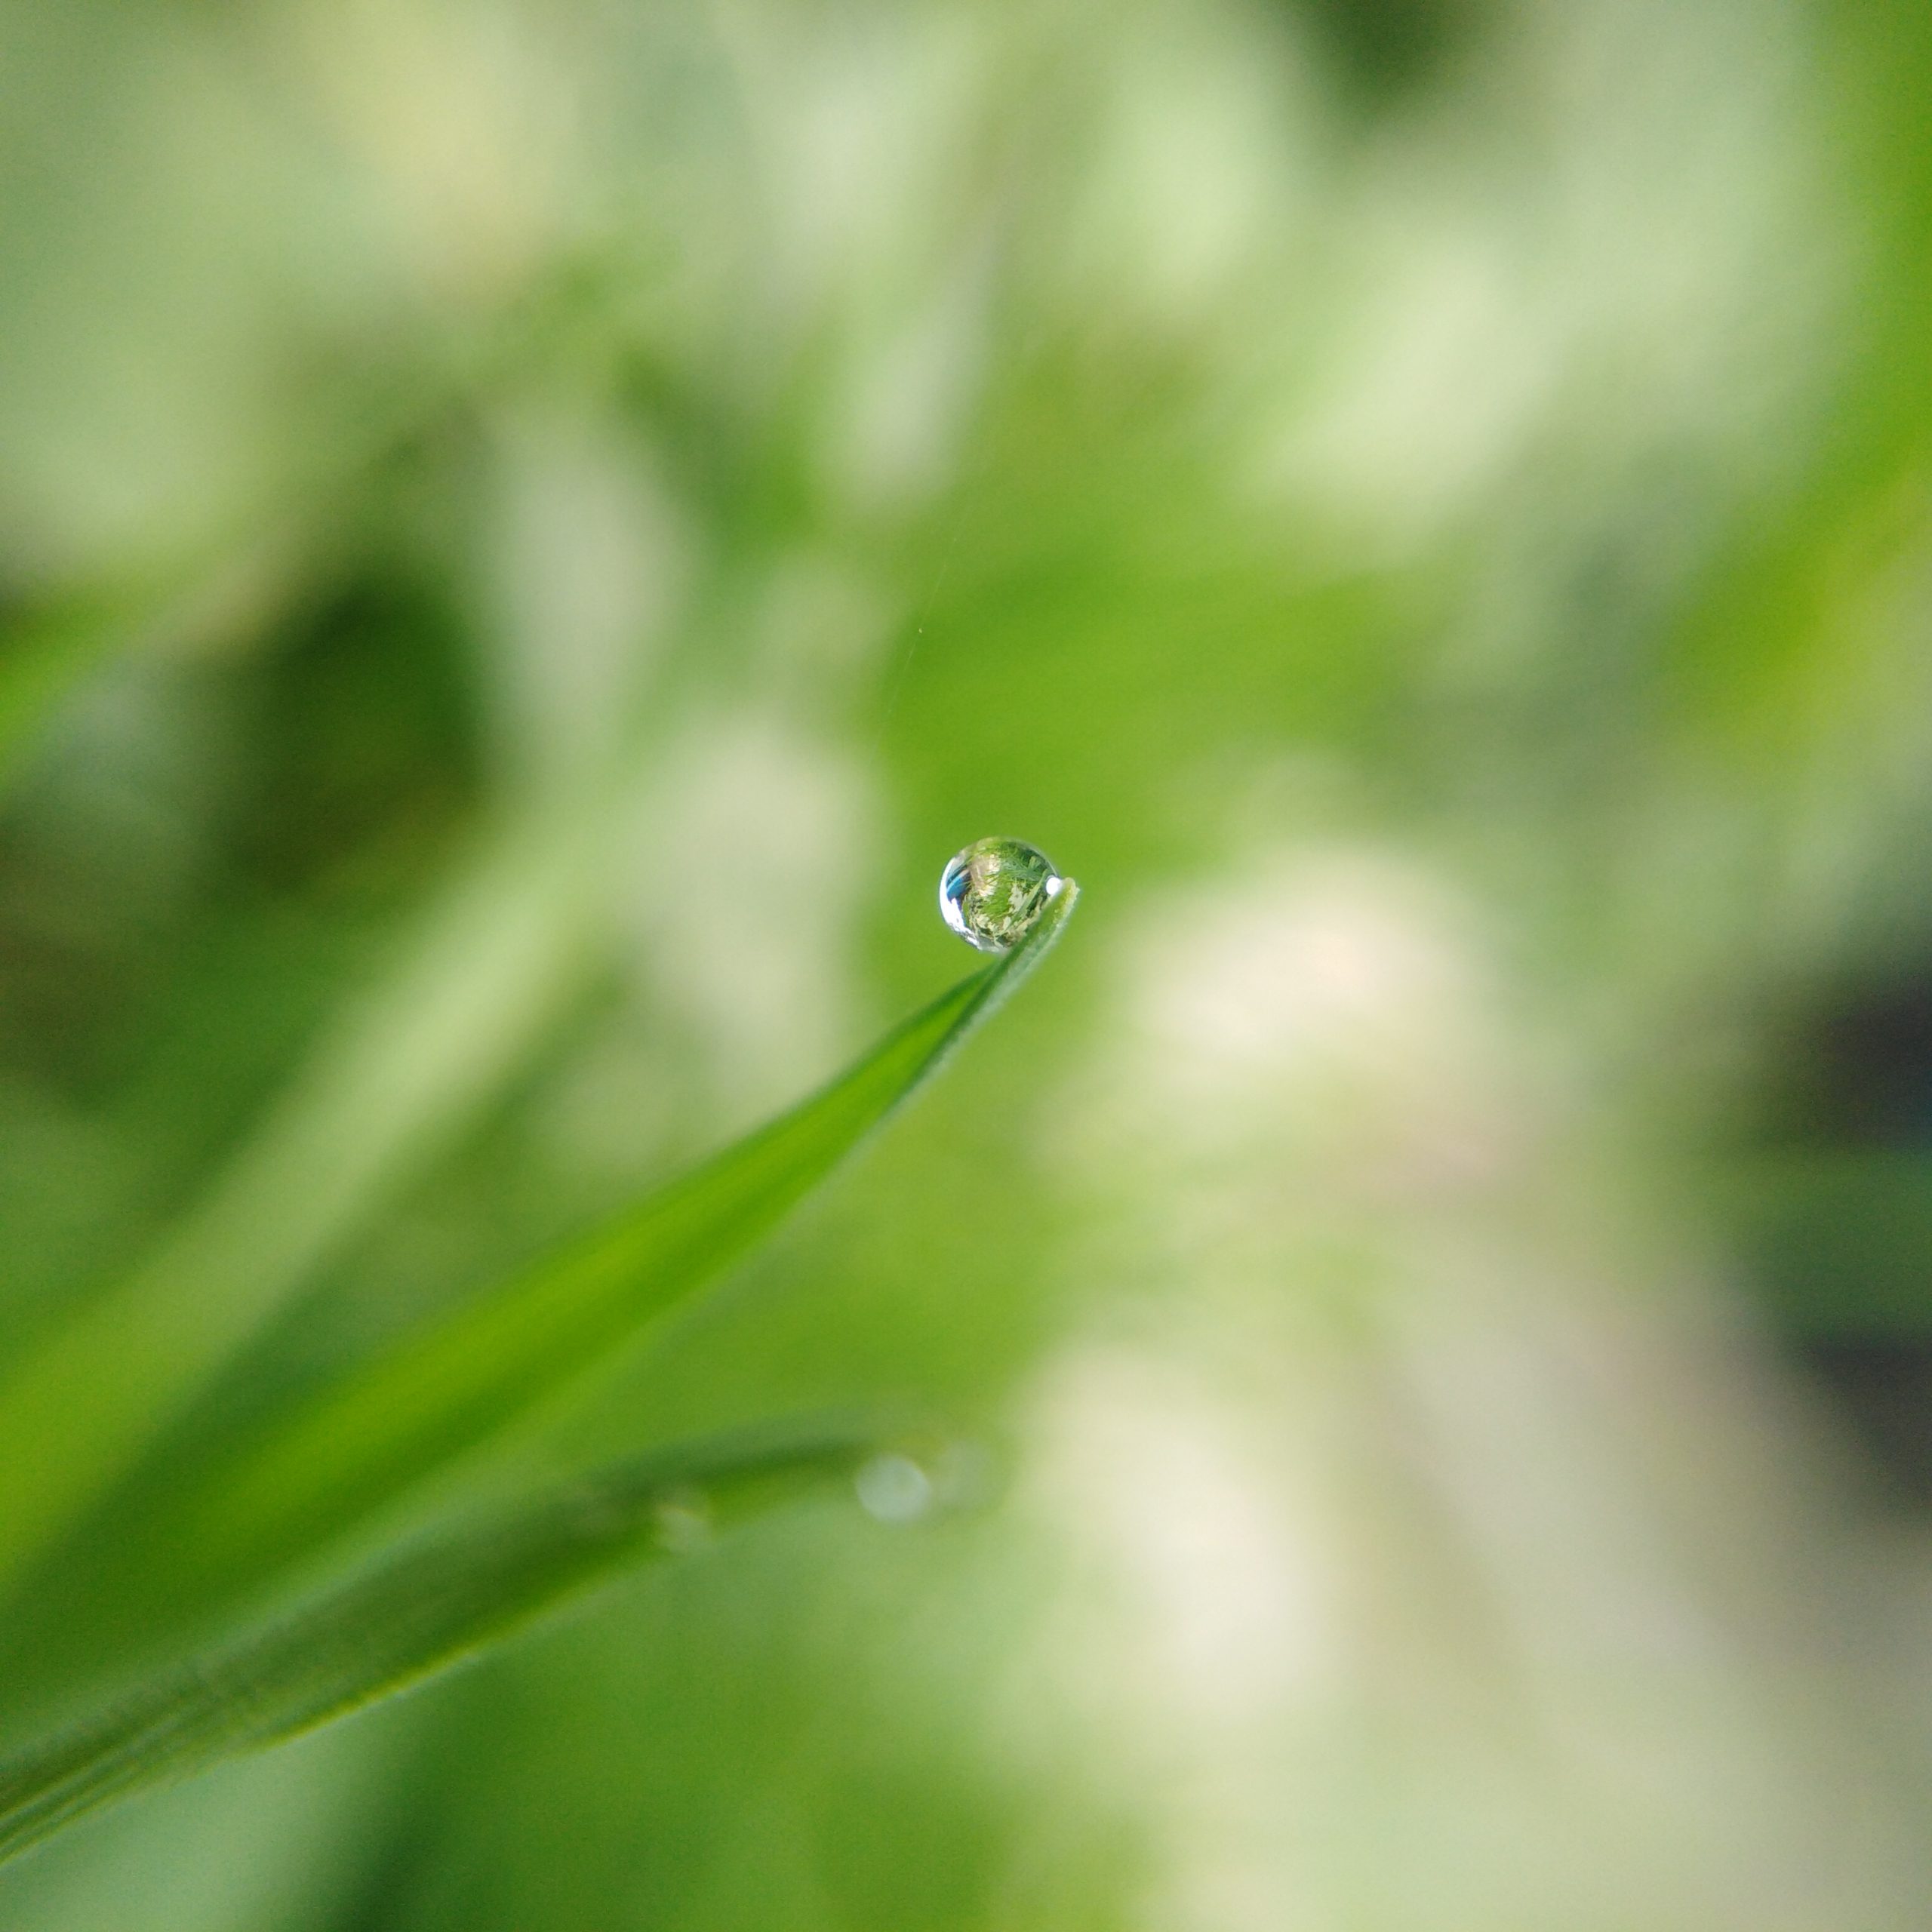 A drop on a grass leaf